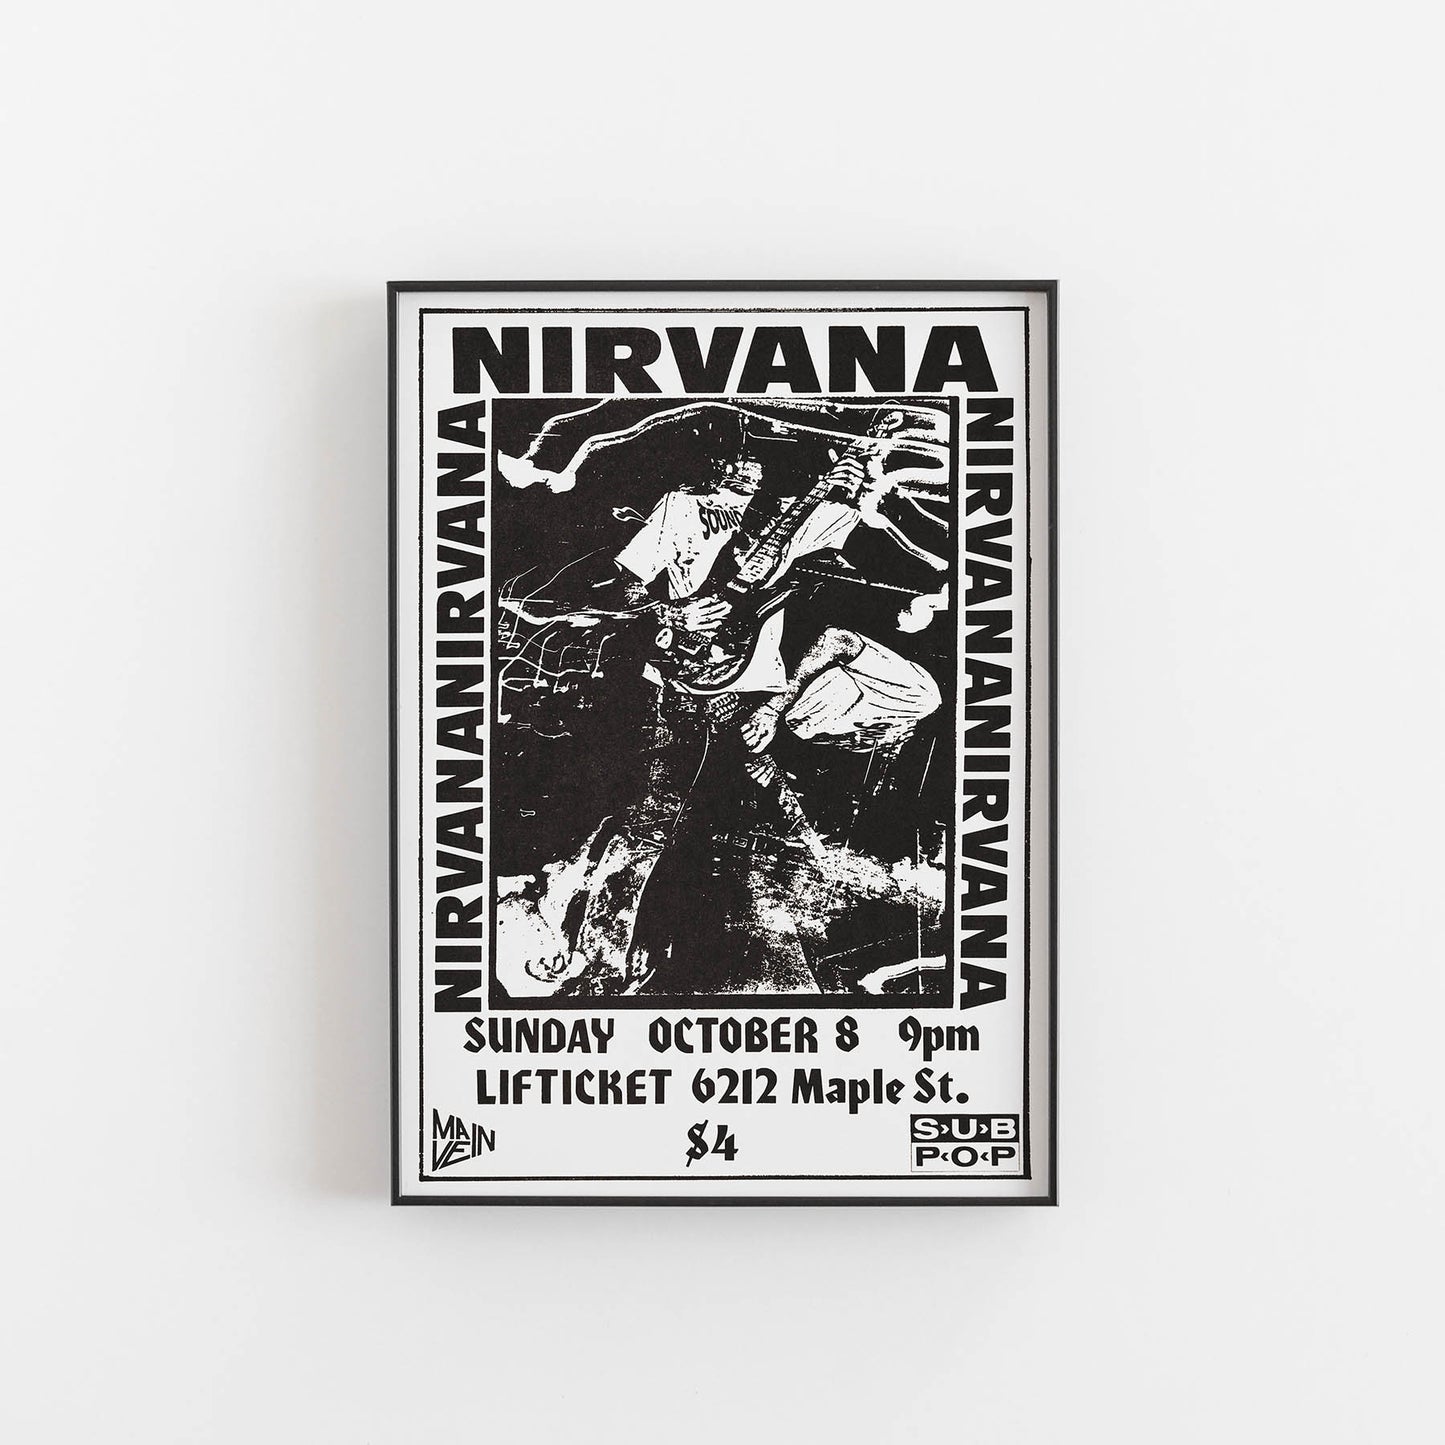 Nirvana concert poster